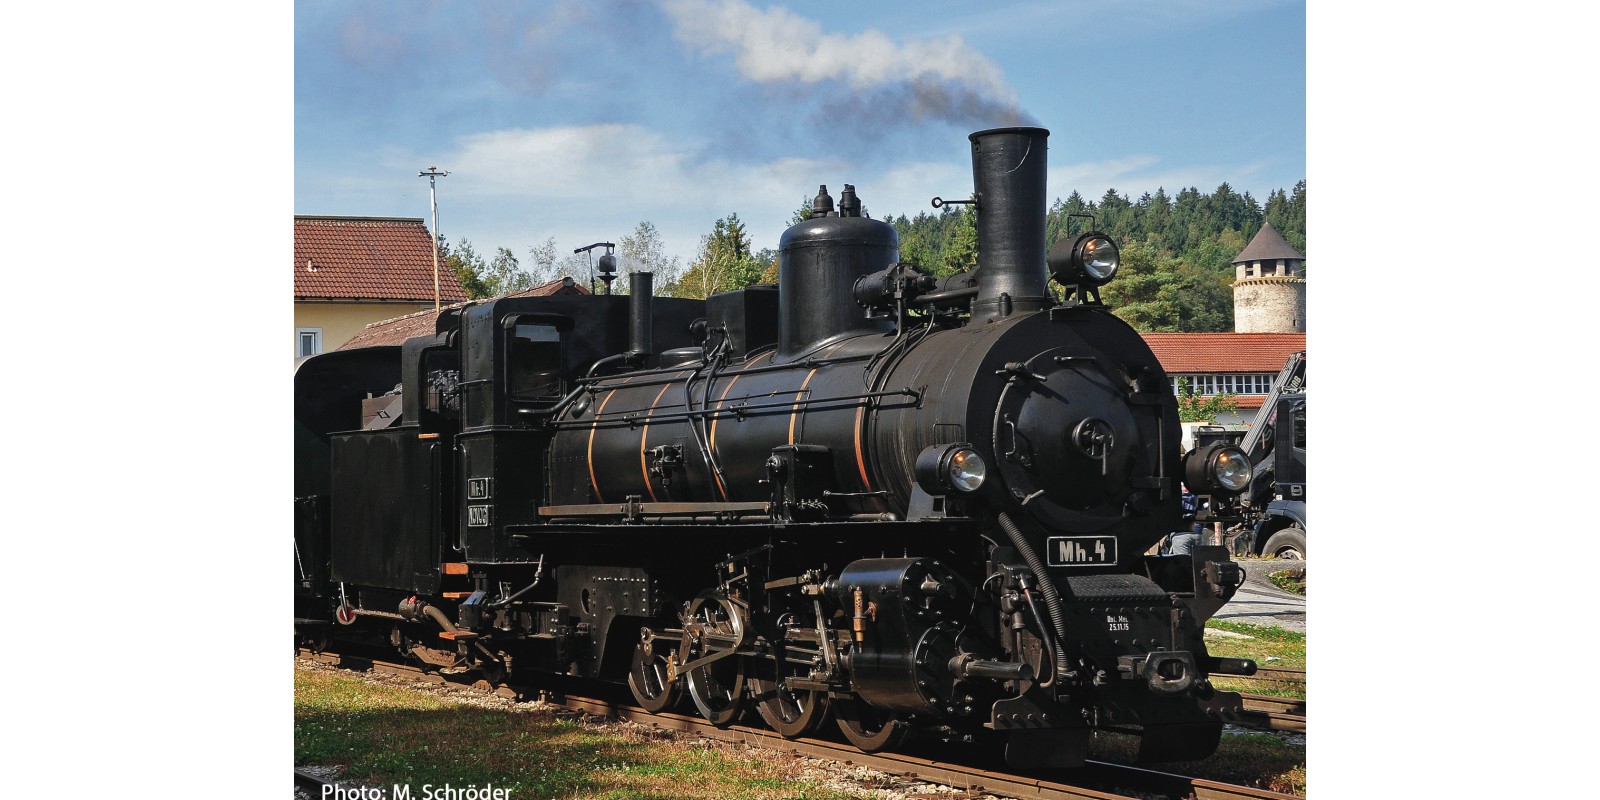 RO33272 - Steam locomotive Mh.4, NÖVOG